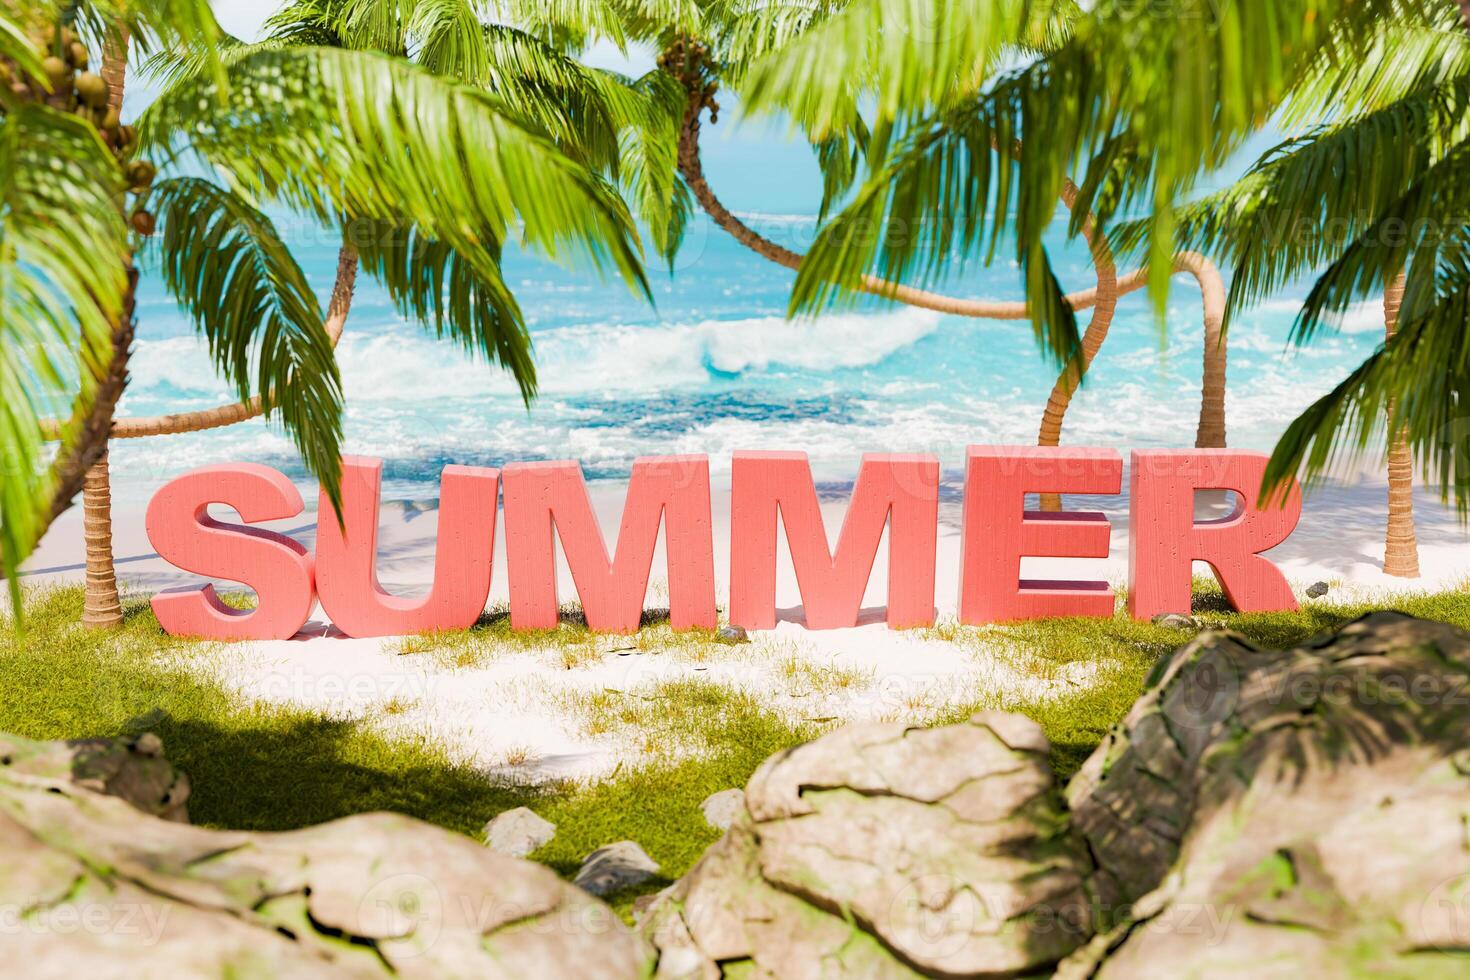 zomer tekst in tropisch strand instelling met palm bomen foto